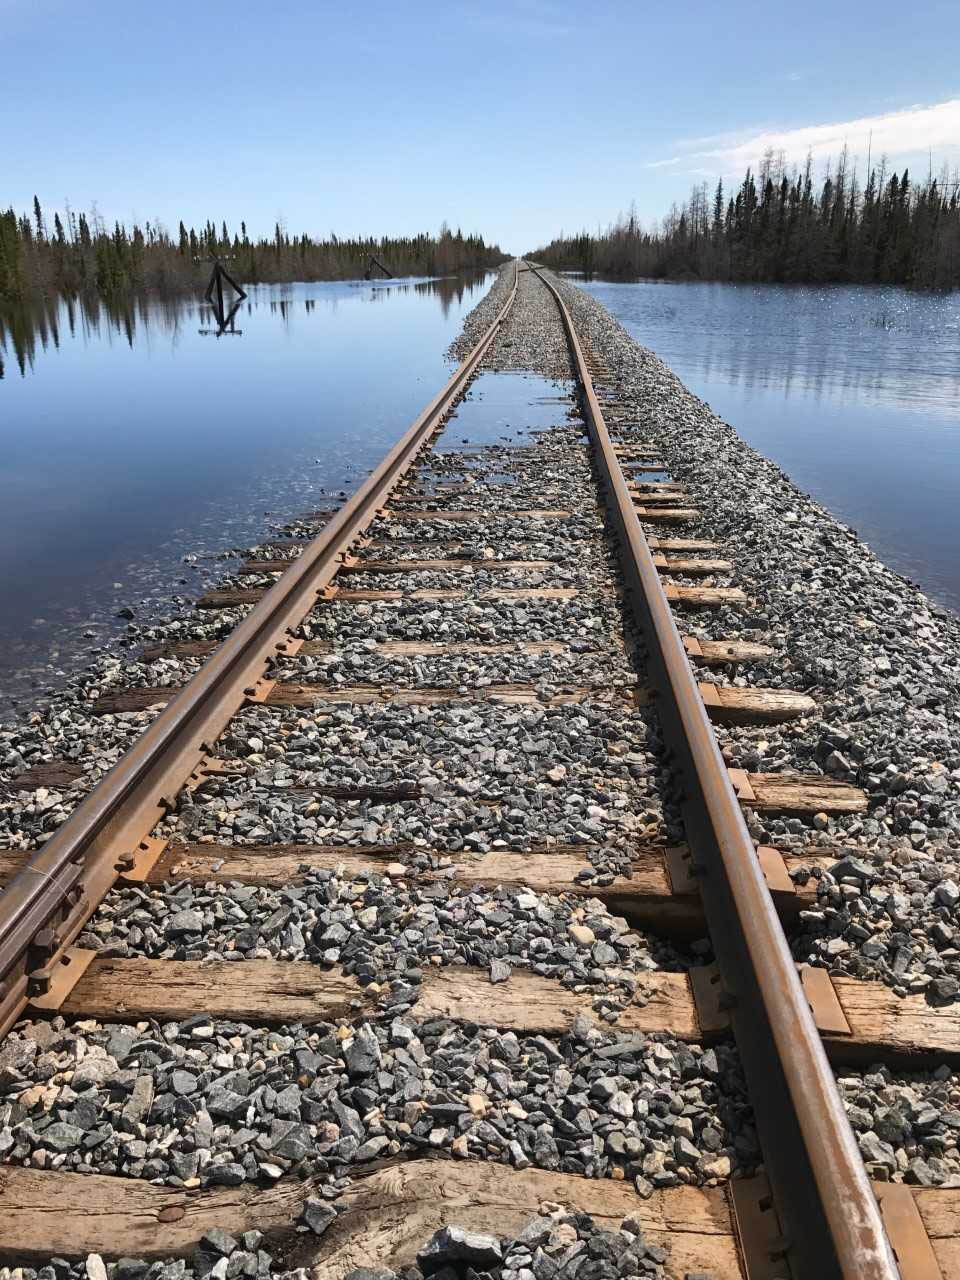 Water washes over the damaged Hudson Bay Railway near Churchill, Manitoba in 2017